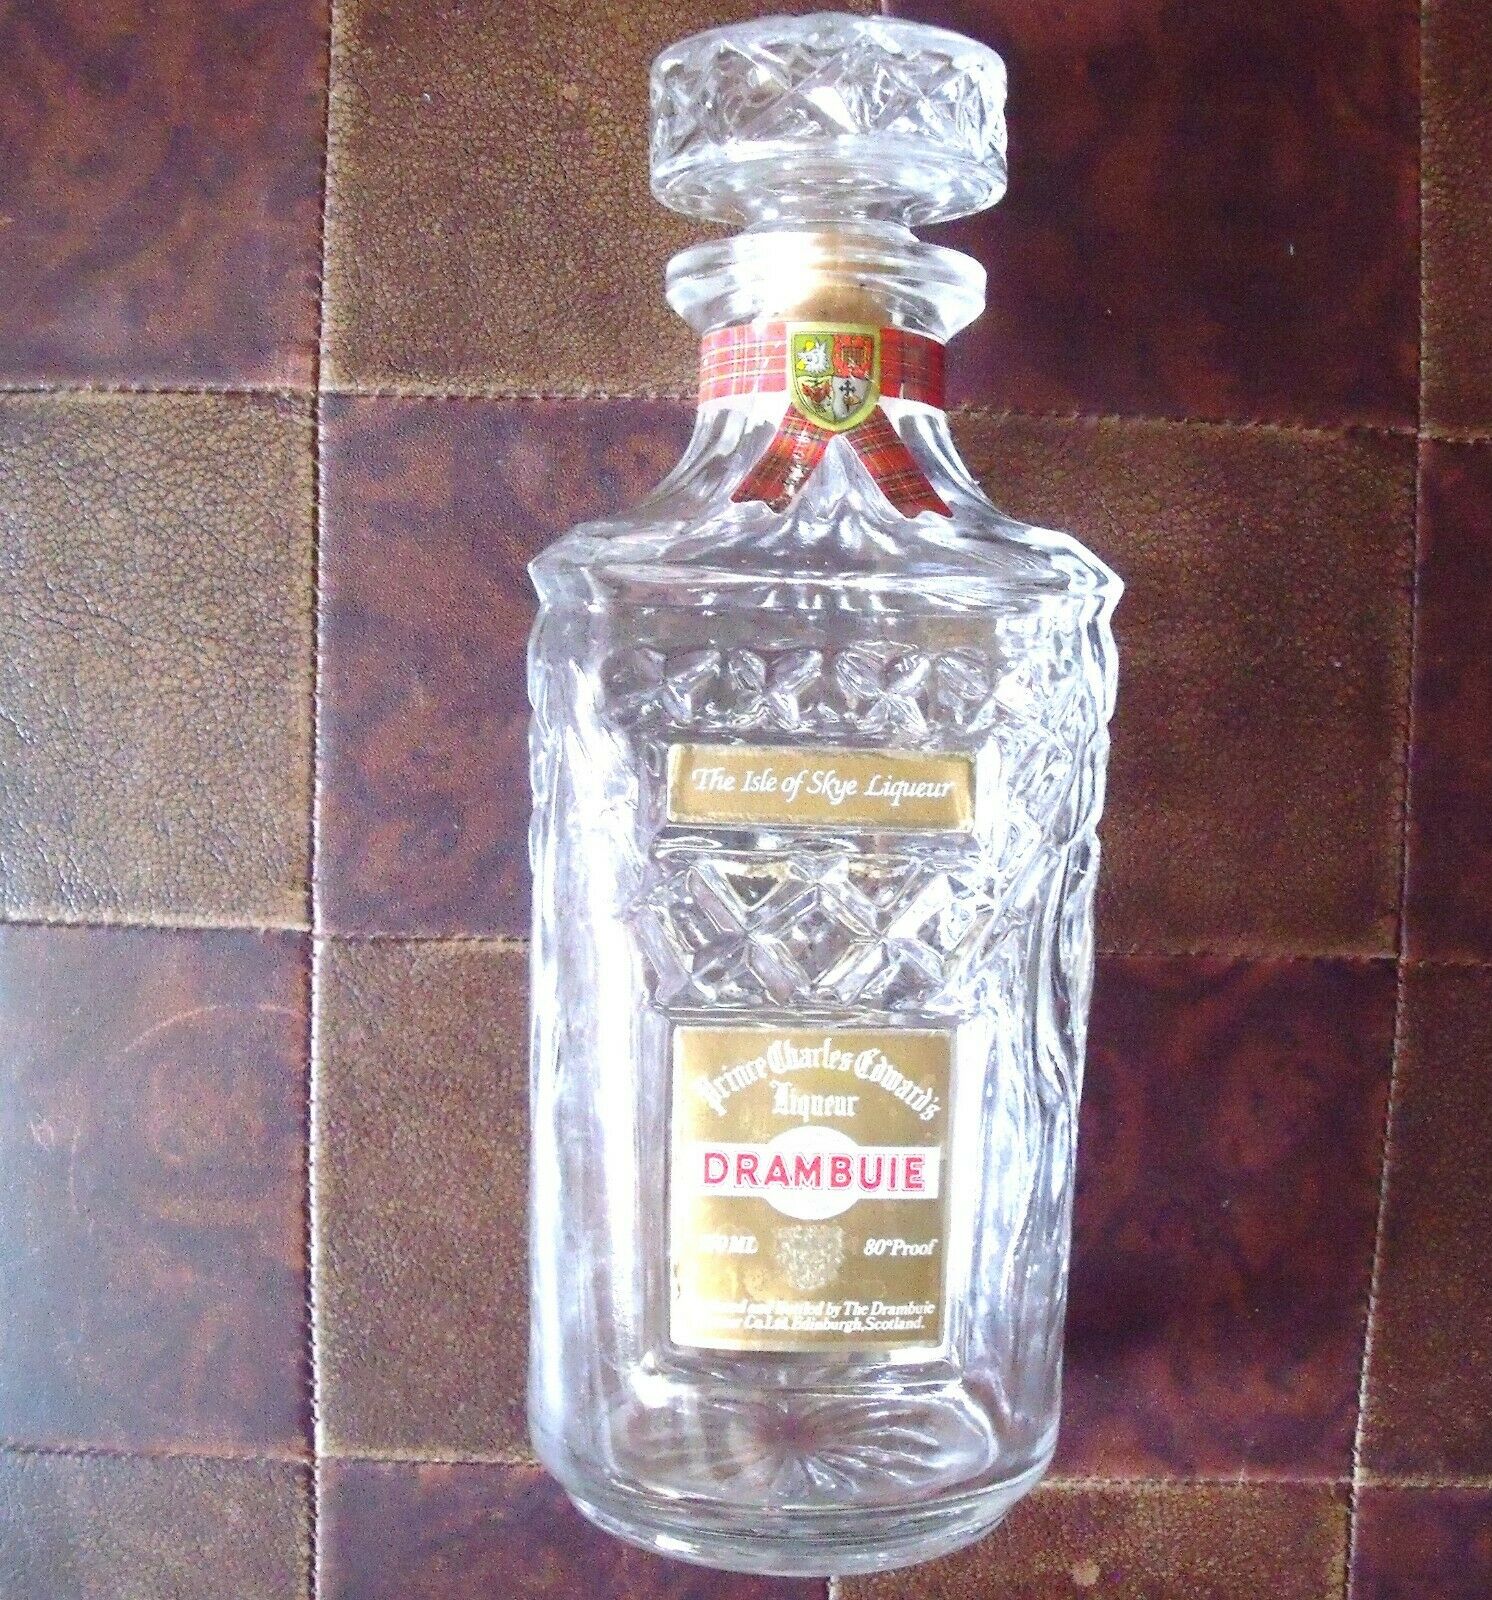 Drambuie Prince Charles Edward’s Drambuie Crystal Glass Liqueur Bottle Decanter